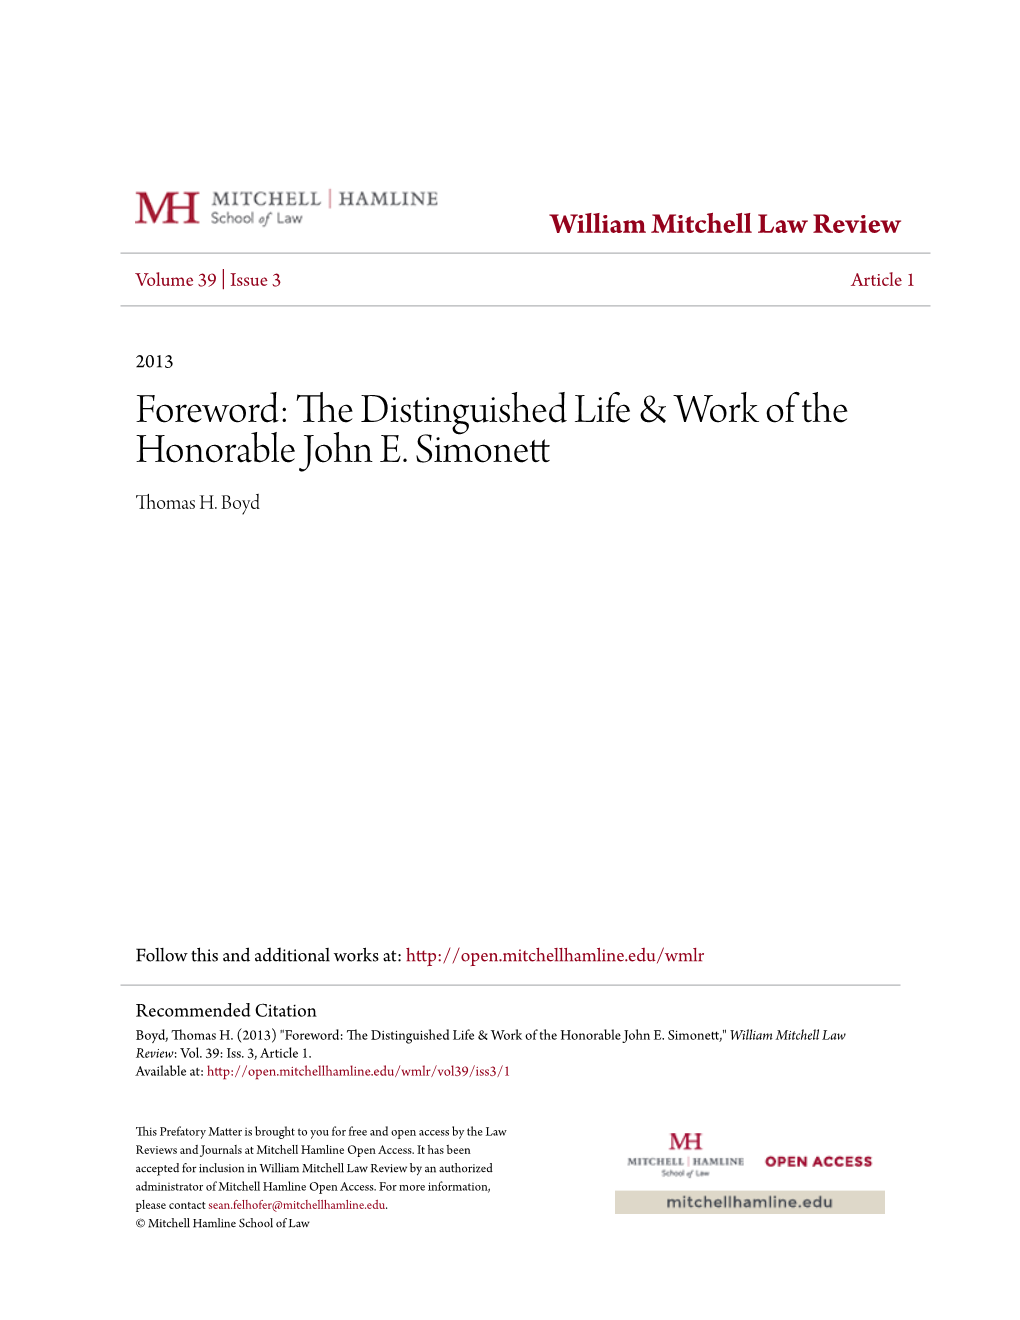 The Distinguished Life & Work of the Honorable John E. Simonett